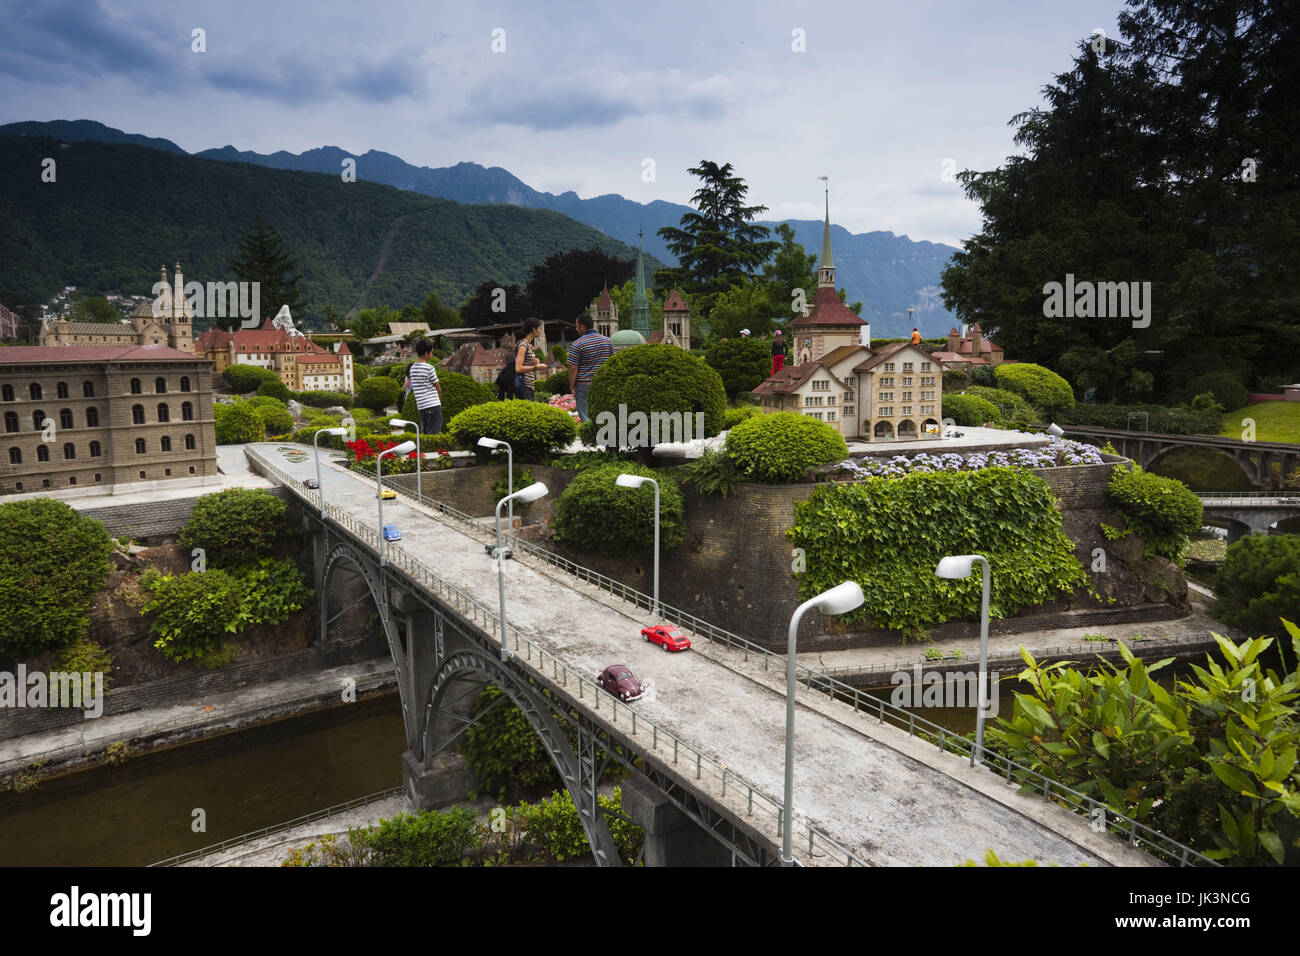 Switzerland, Ticino, Lake Lugano, Melide, Swissminiatur, Miniature Switzerland model theme park, NR Stock Photo